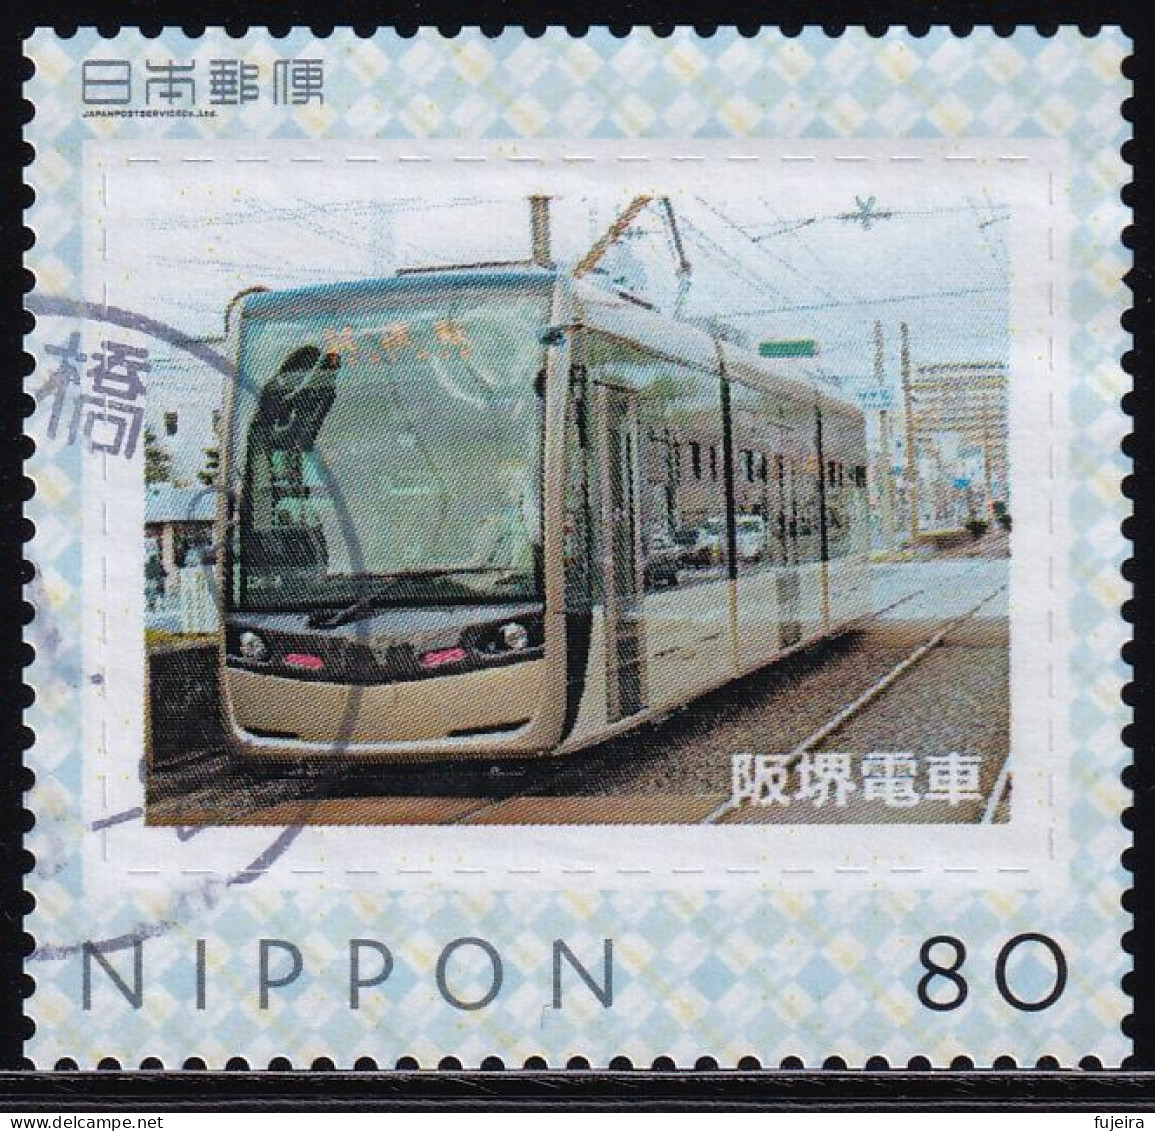 Japan Personalized Stamp, Tram (jpv9617) Used - Gebraucht